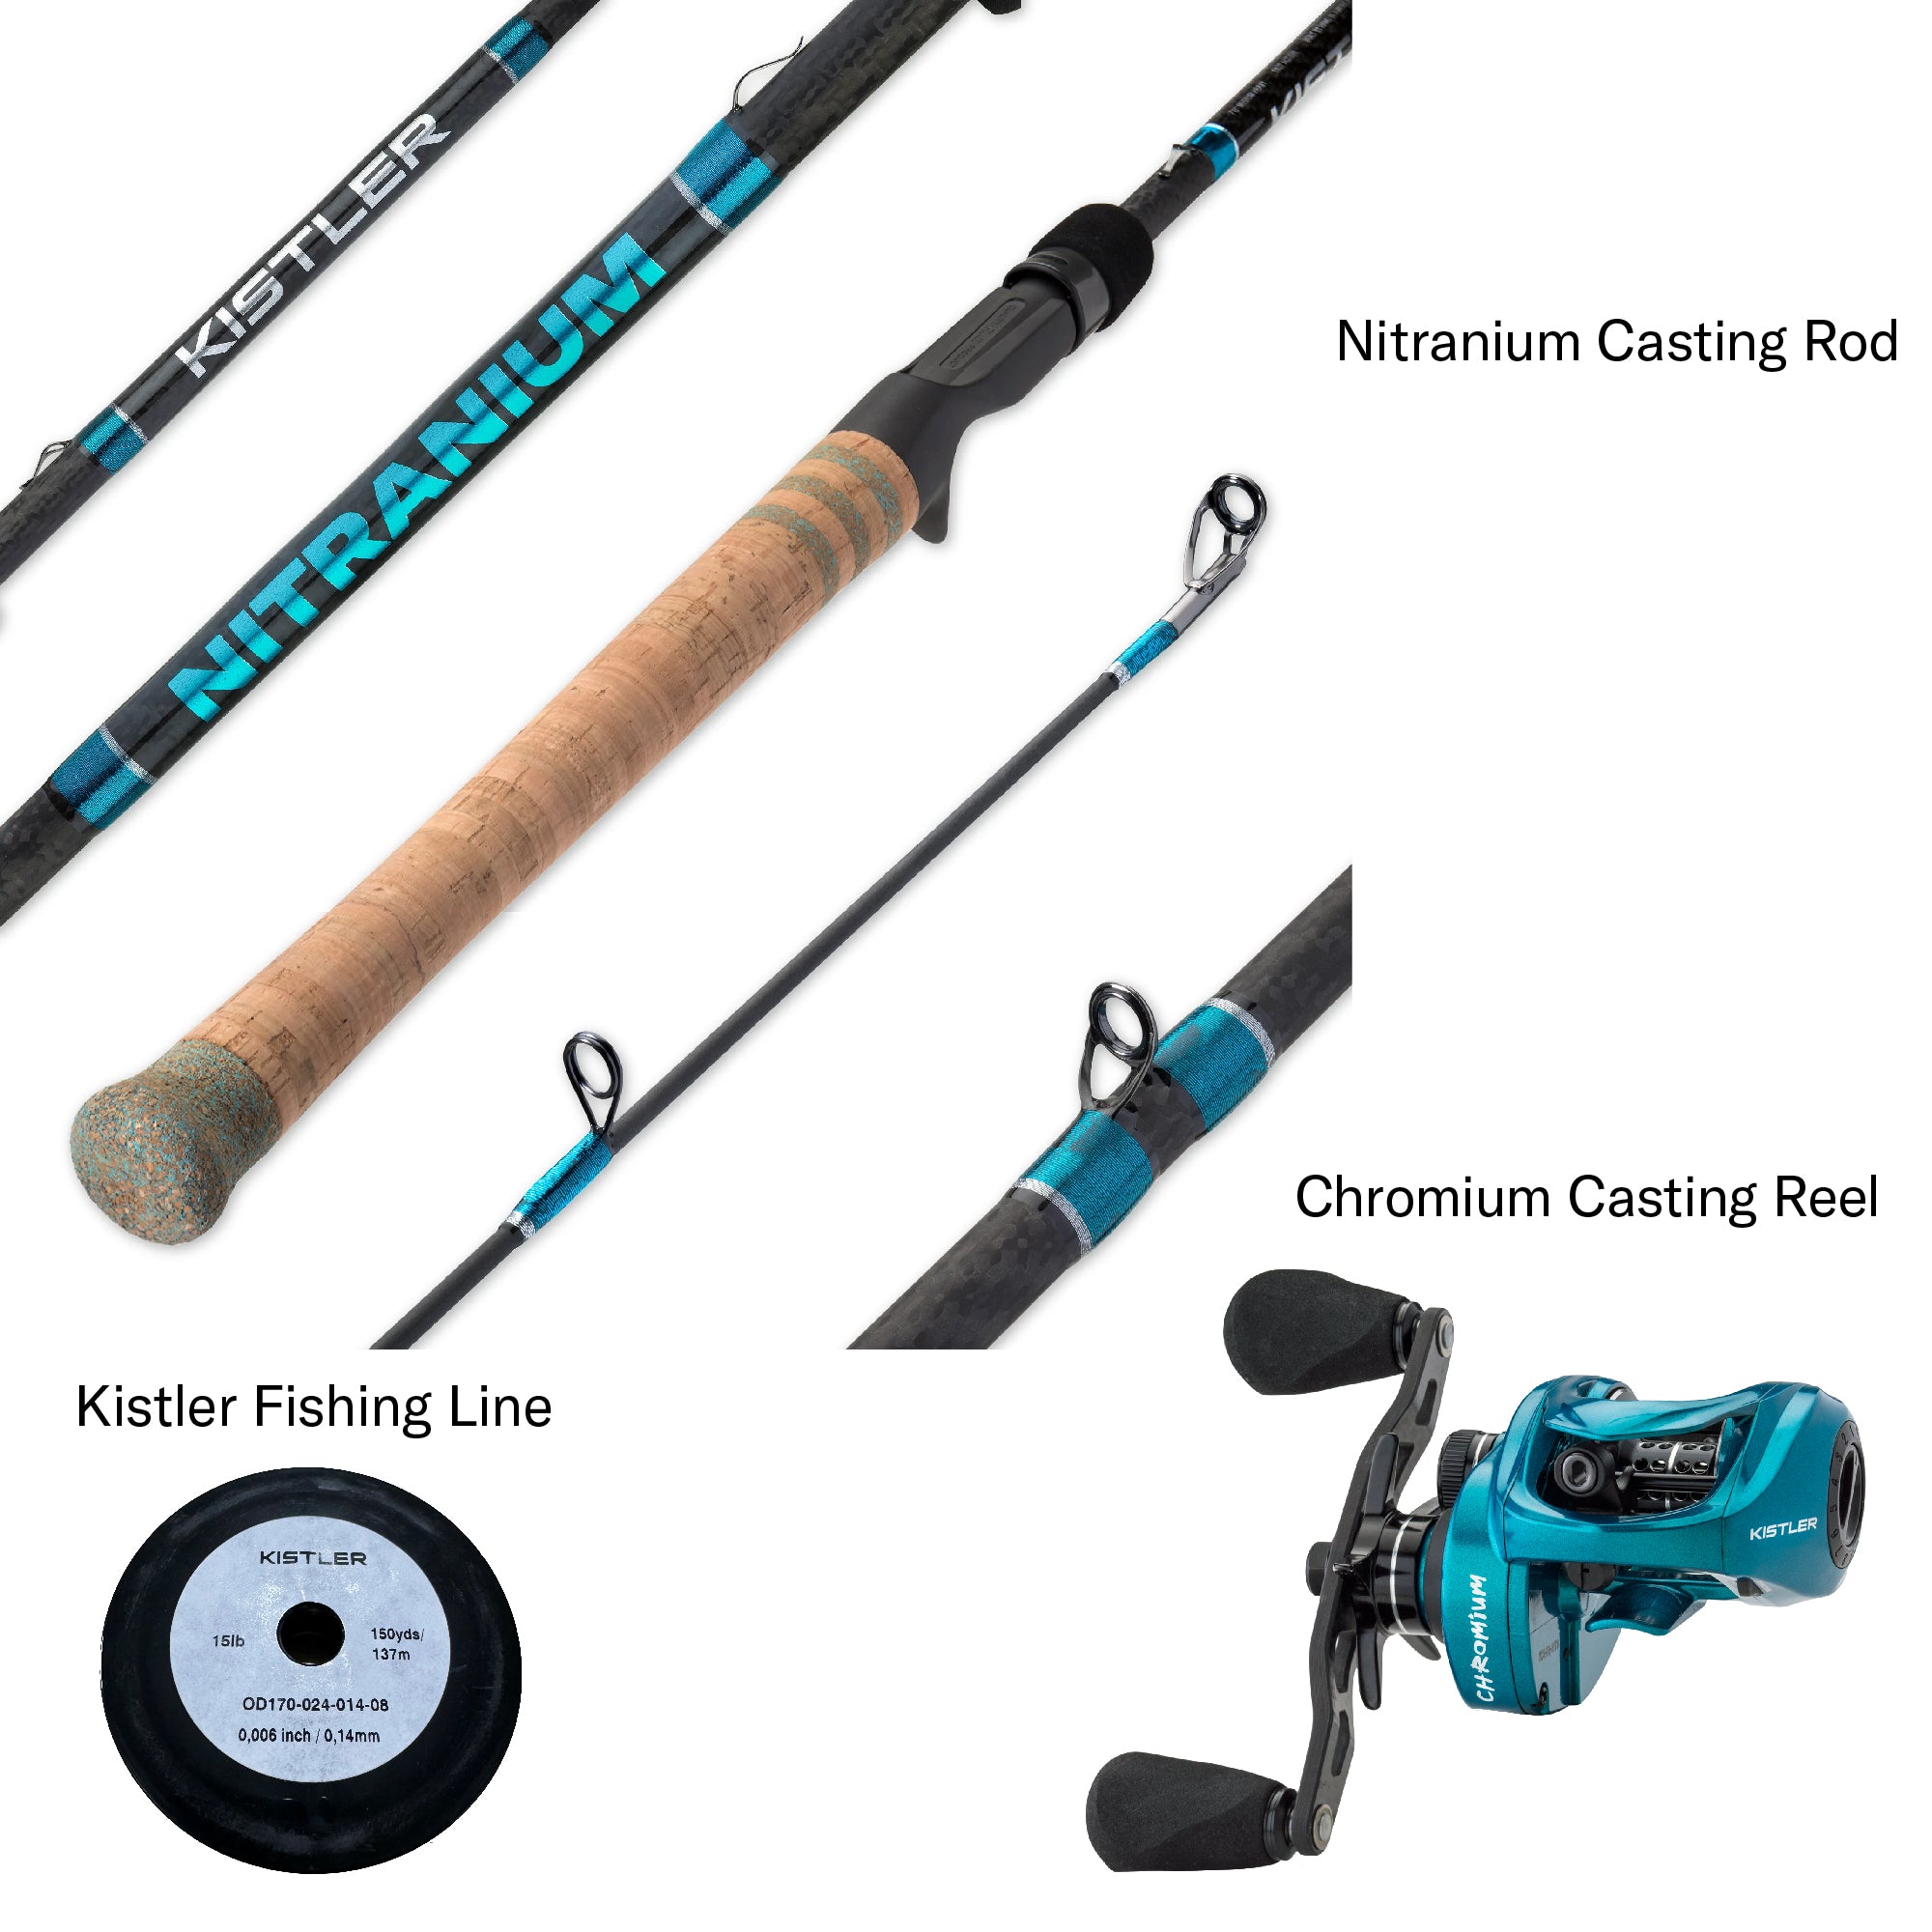 Nitranium Casting Rod, Chromium Reel, and Fishing Line – KISTLER